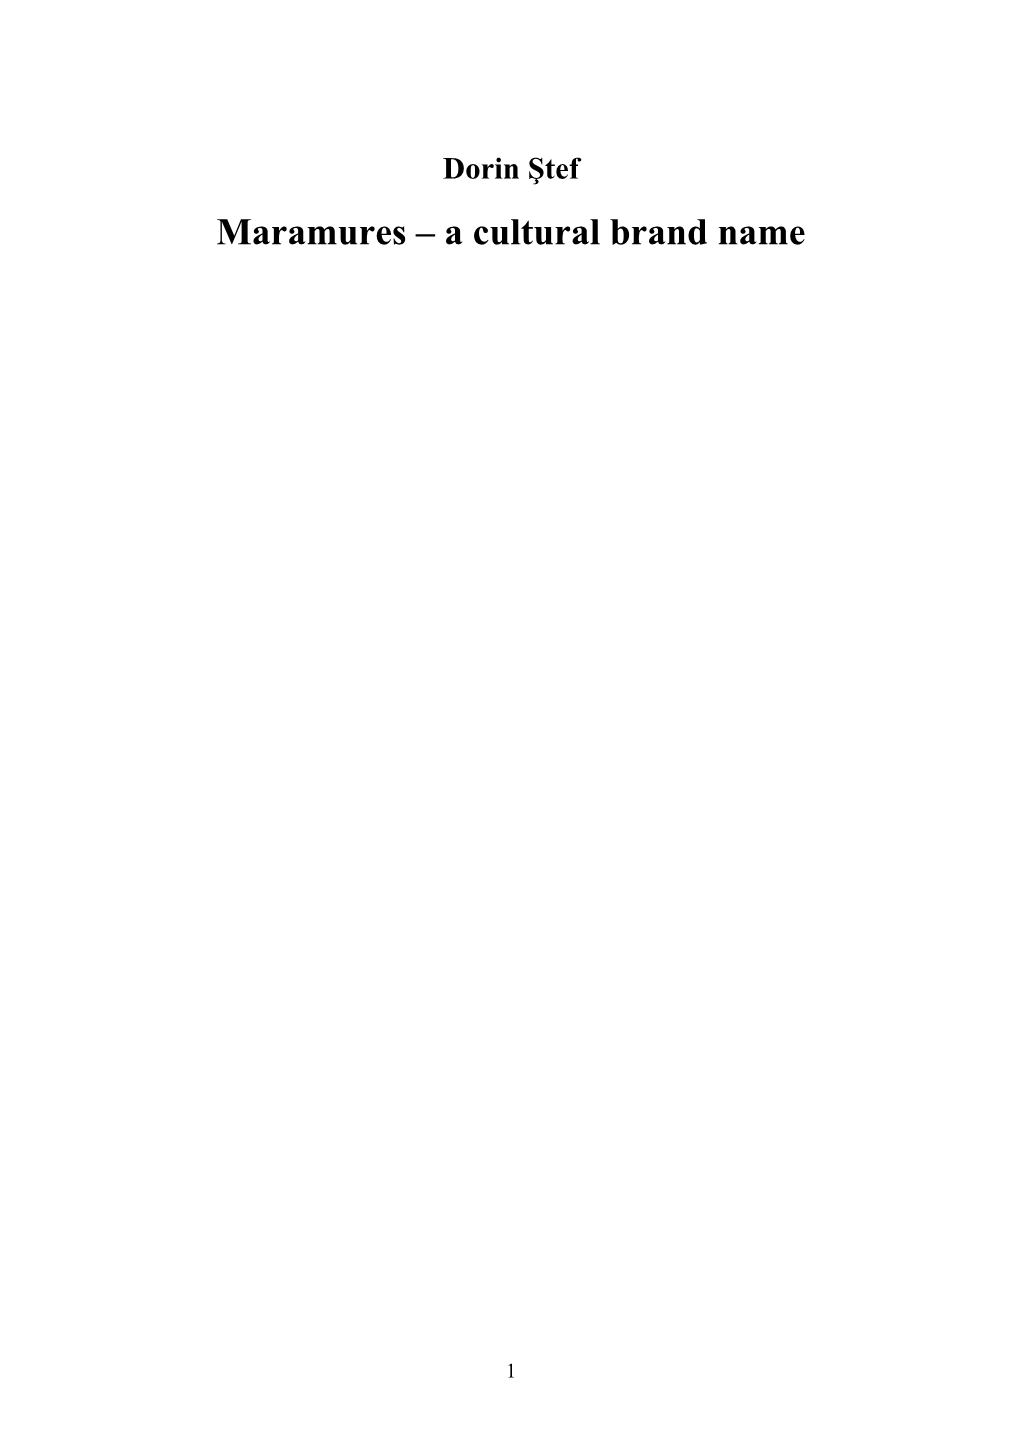 Maramures - a Cultural Brand Name